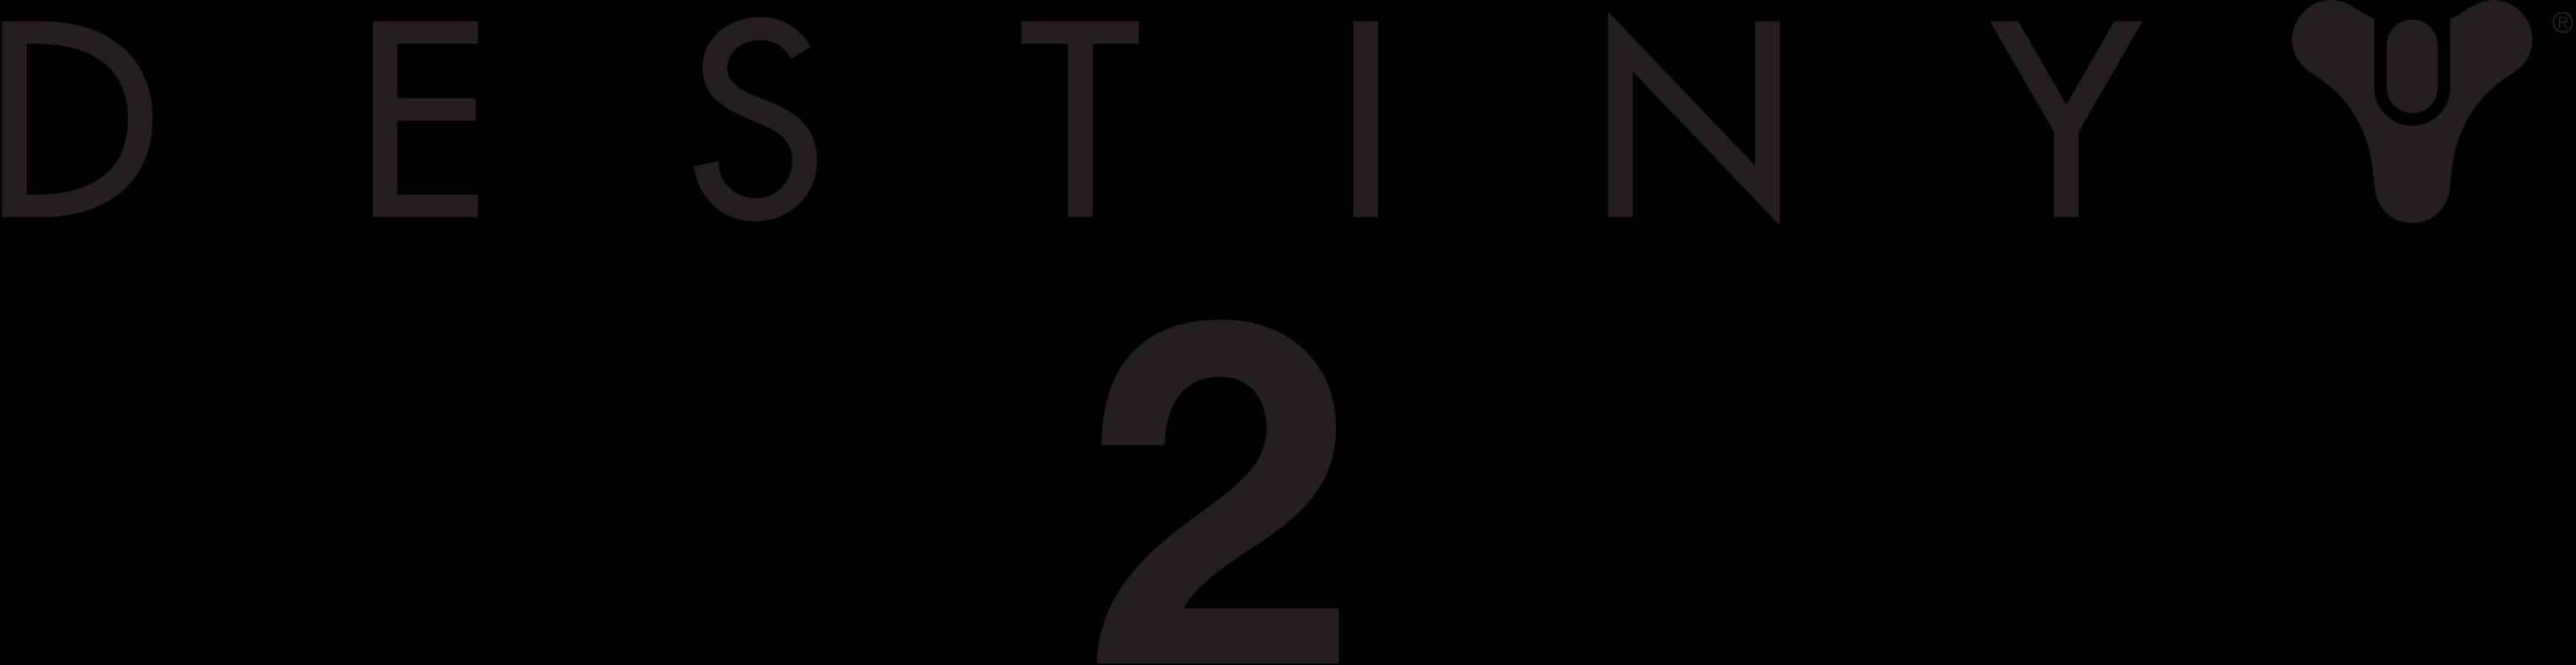 Destiny2 Logo Mit Dem Wort 